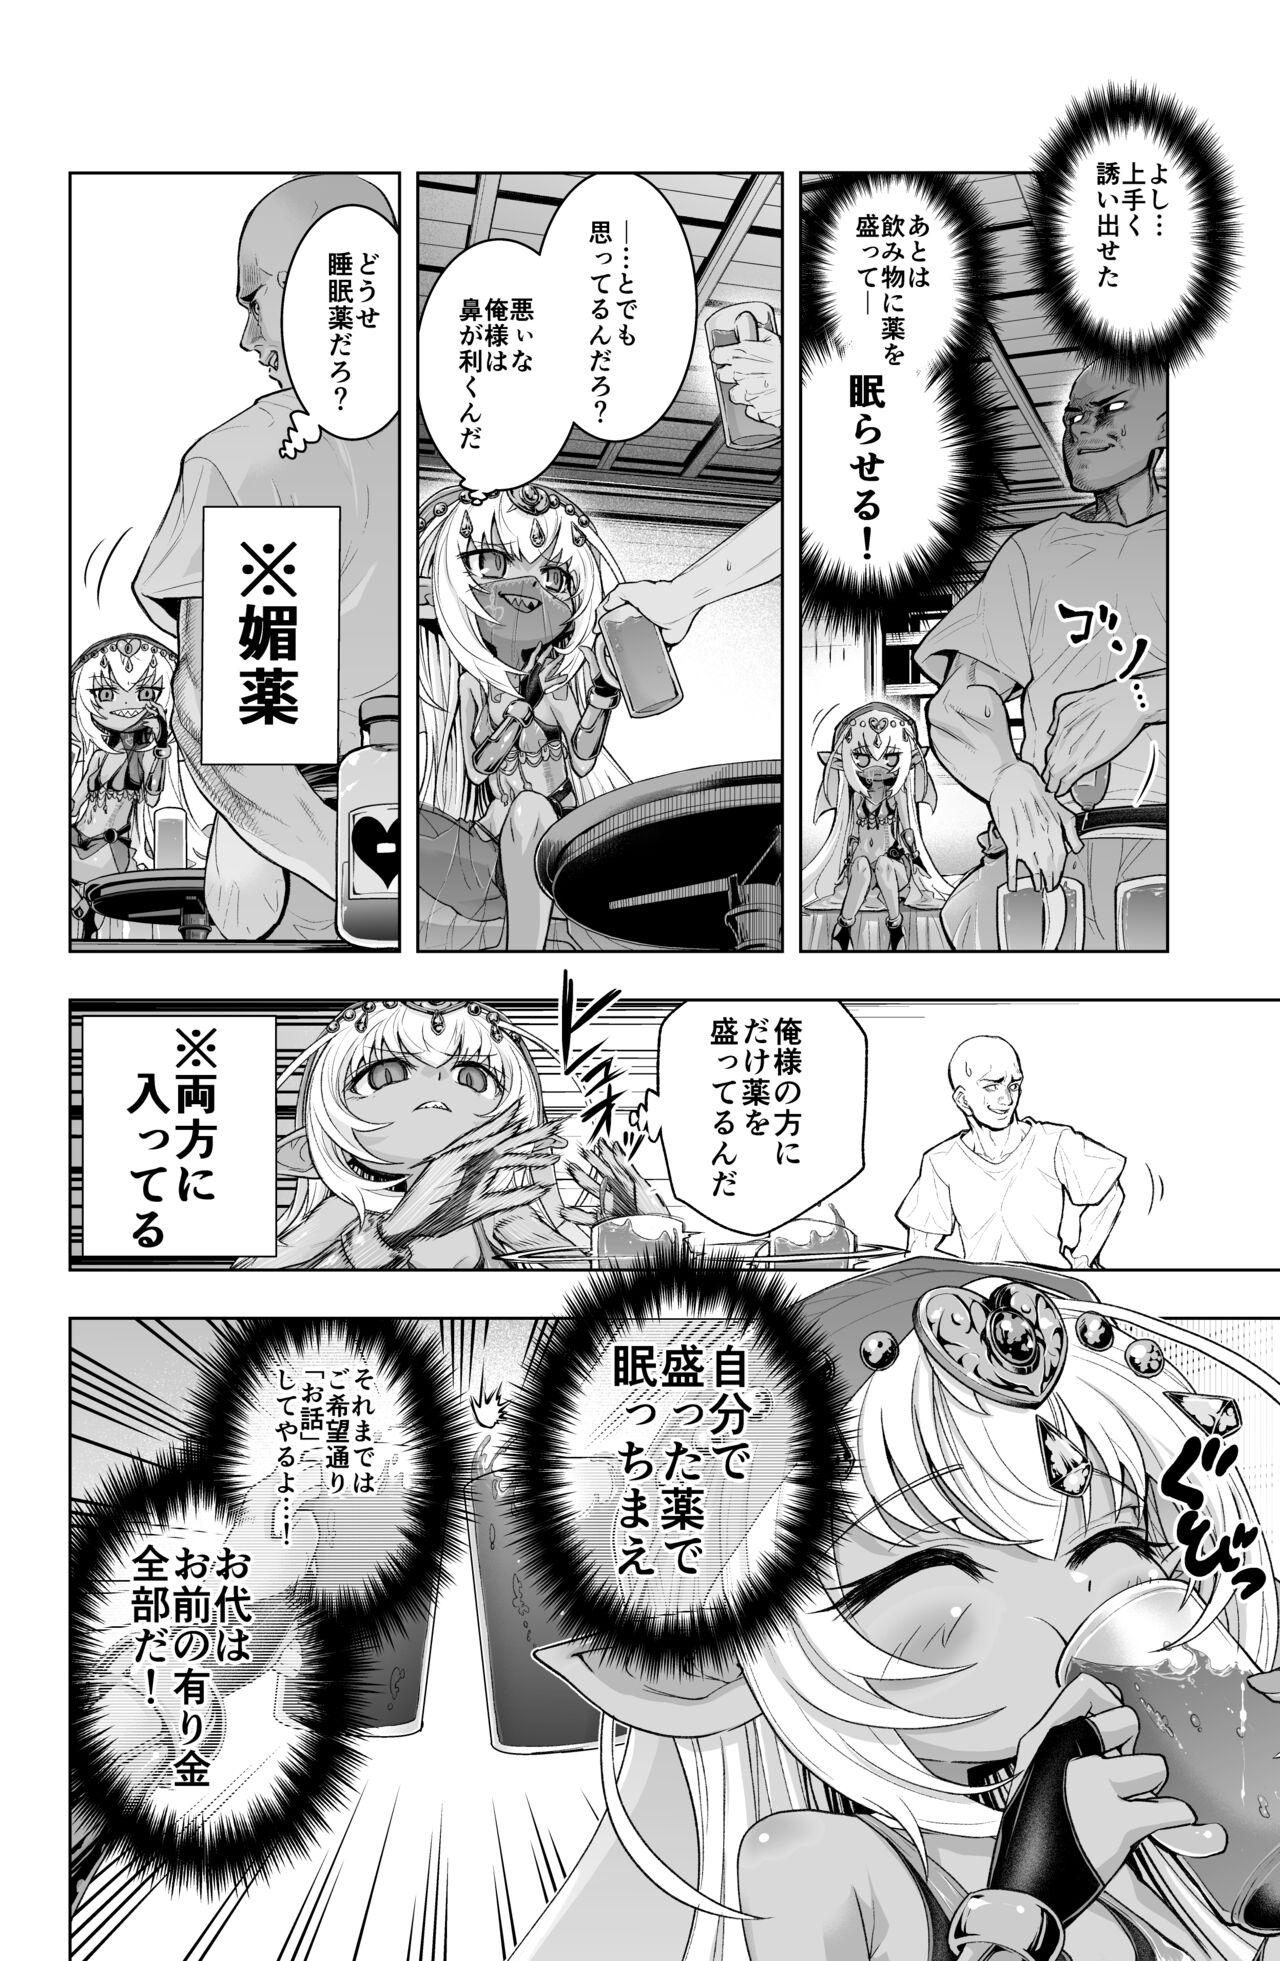 Pelada Dark Elf no Kati-chan no Manga - Original Storyline - Page 4